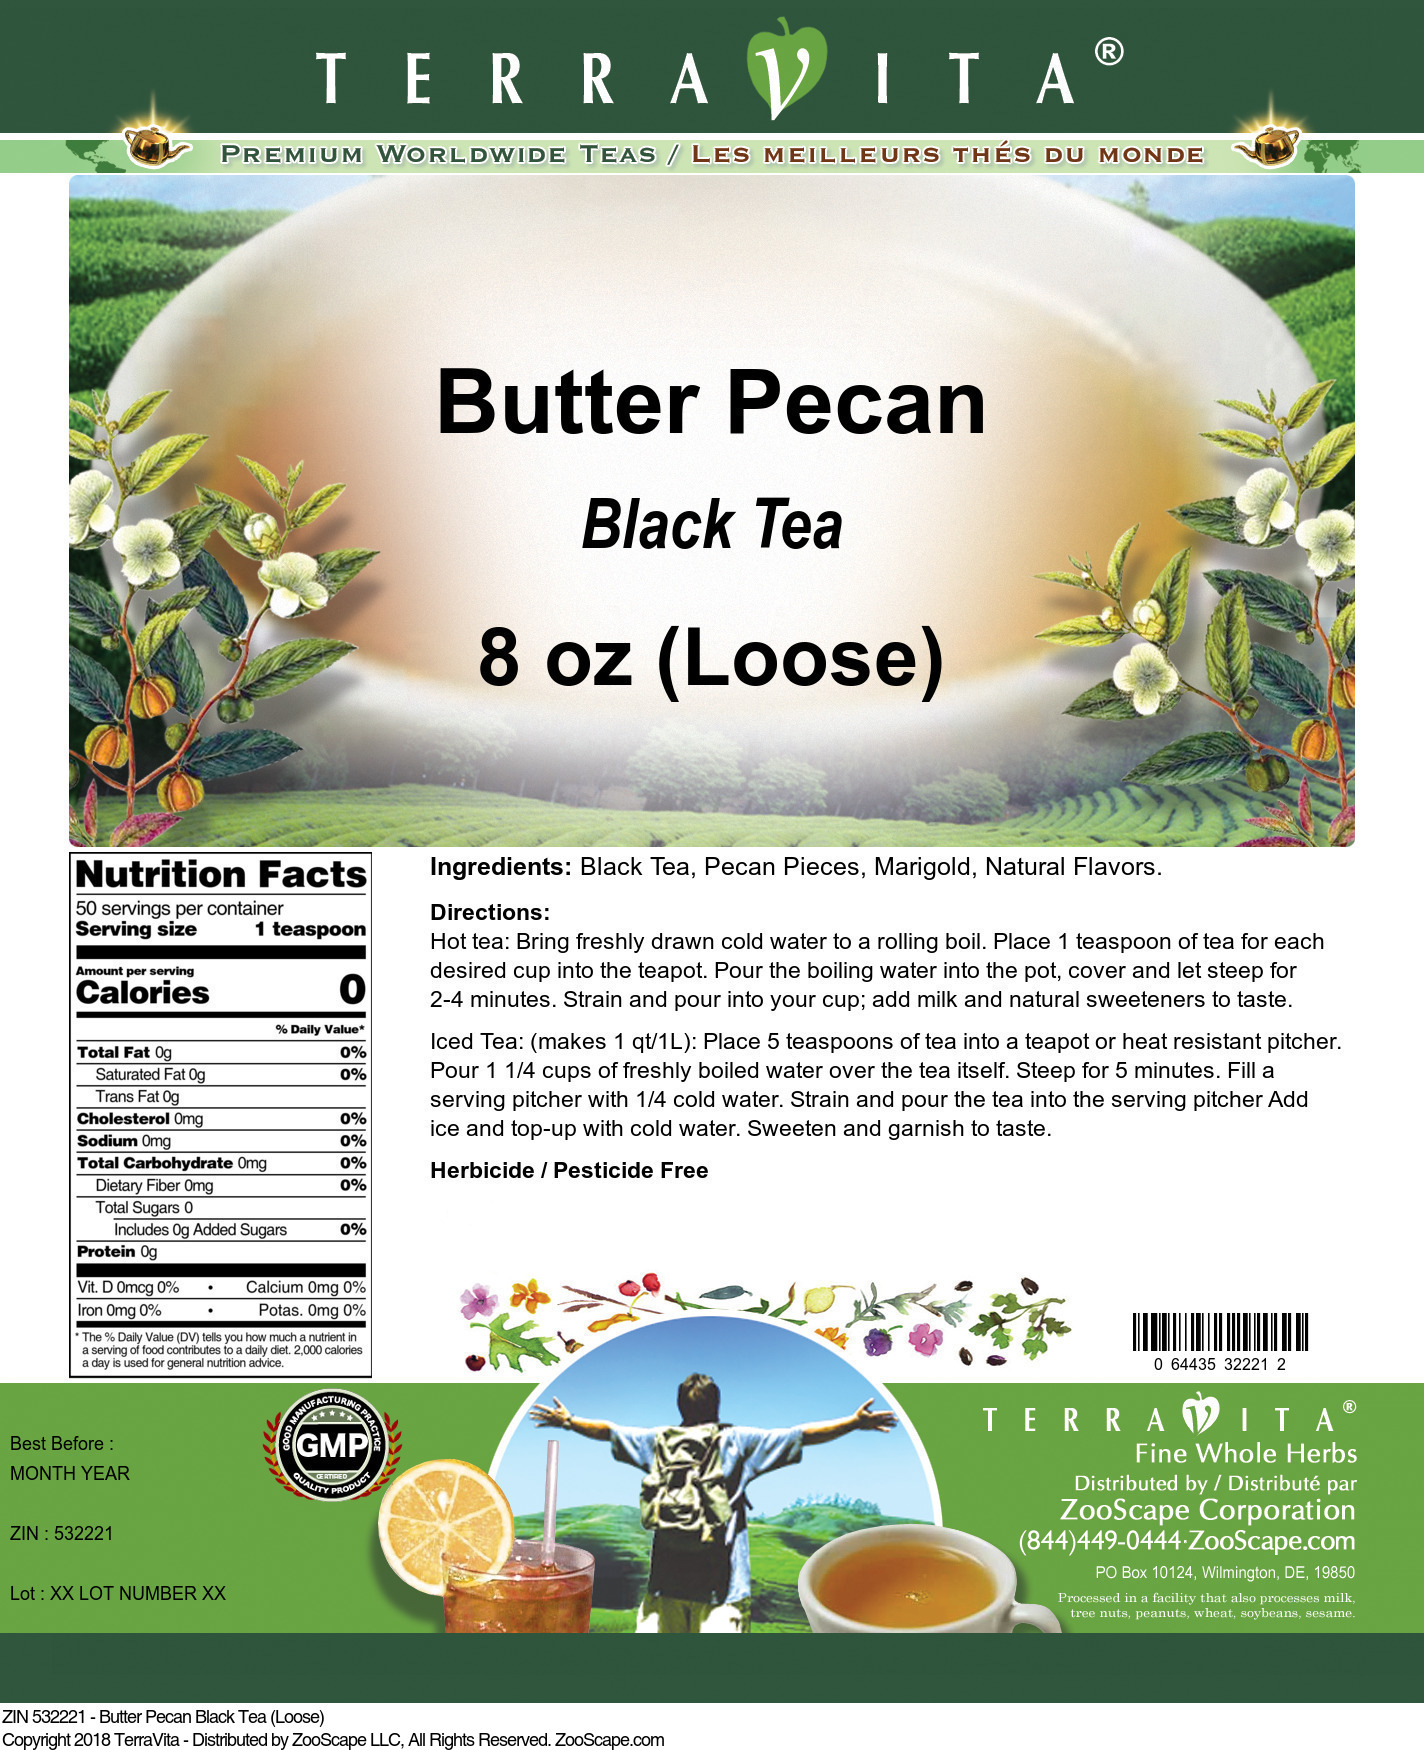 Butter Pecan Black Tea (Loose) - Label